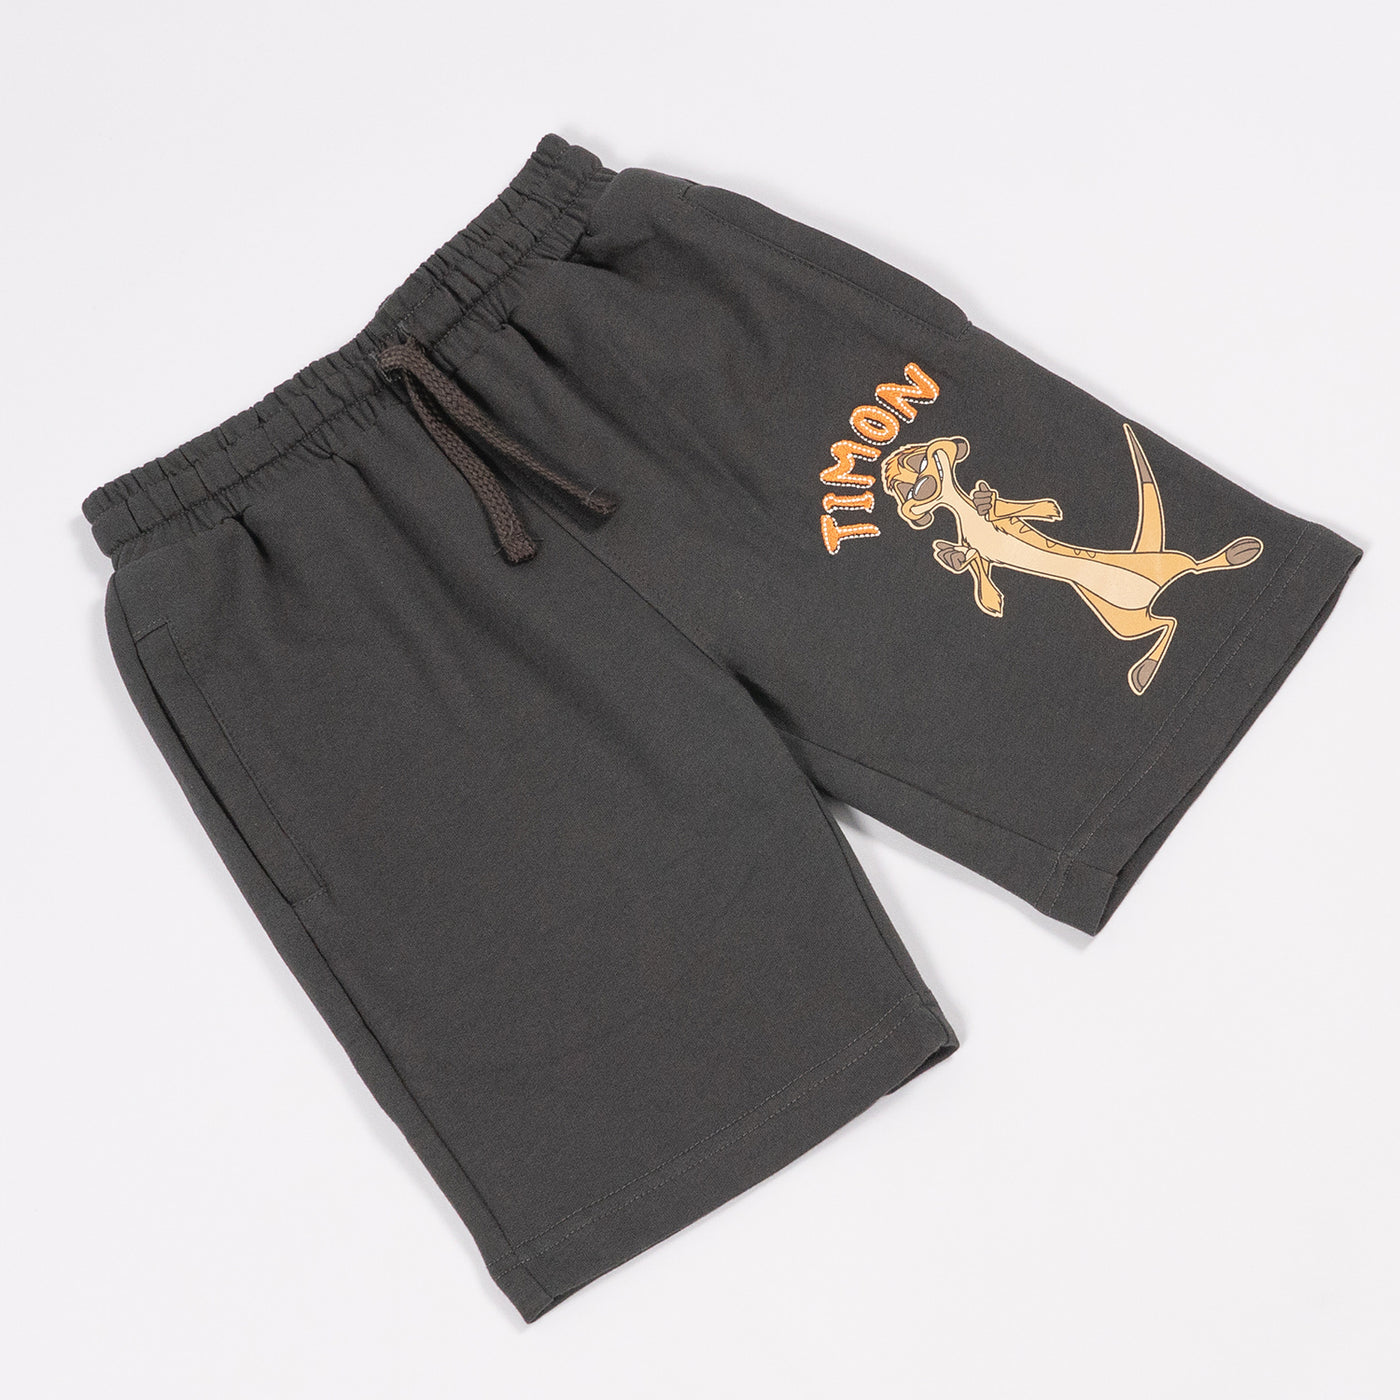 Lion King Boy Timon Shorts  - กางเกงขาสั้นเด็กไลอ้อนคิงลายทีโมน